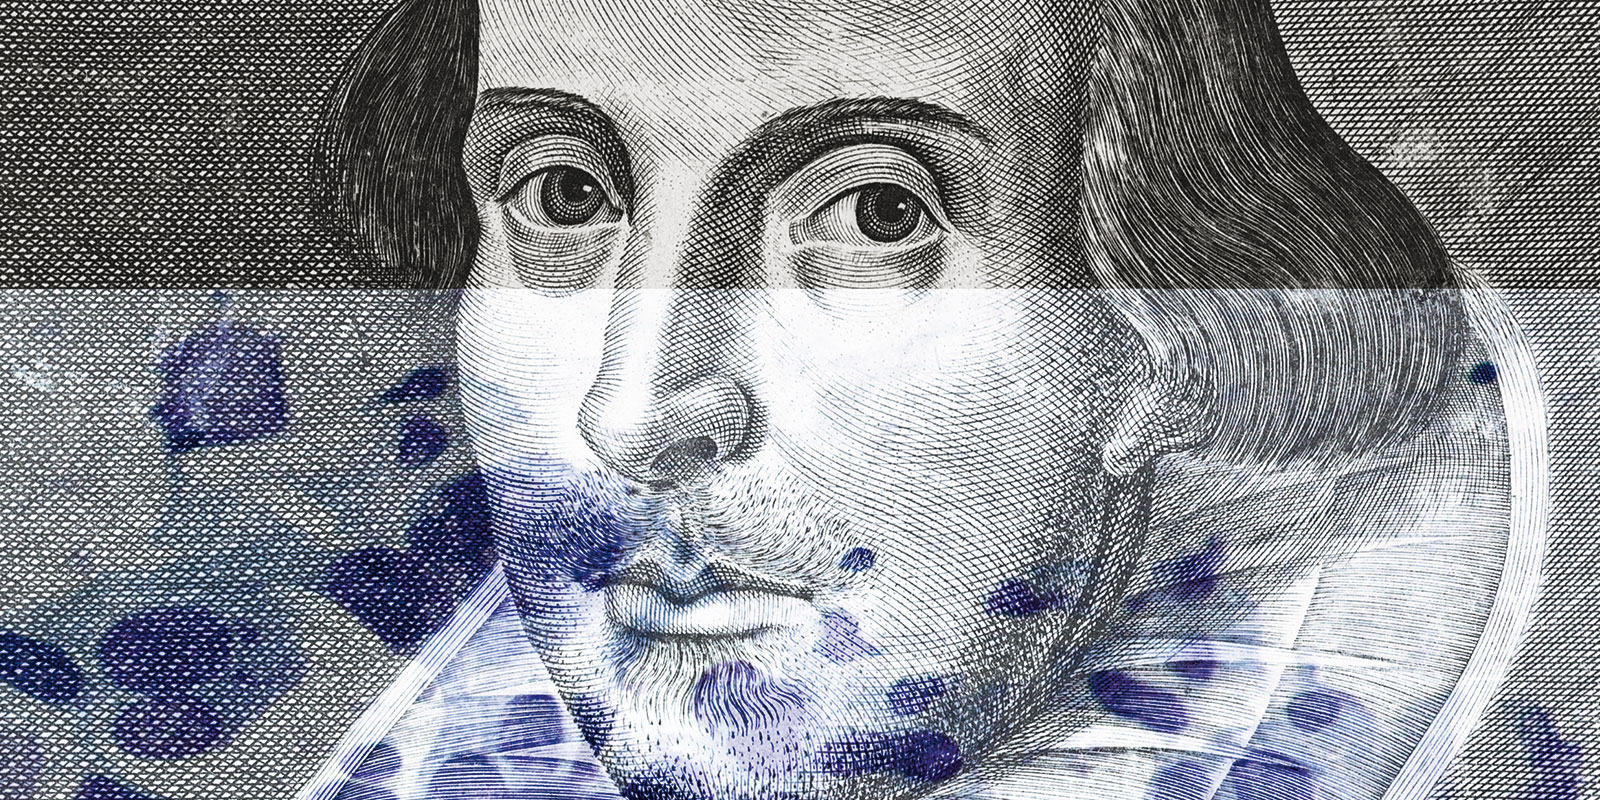 The Droeshout portrait of William Shakespeare, Martin Droeshout [public domain]